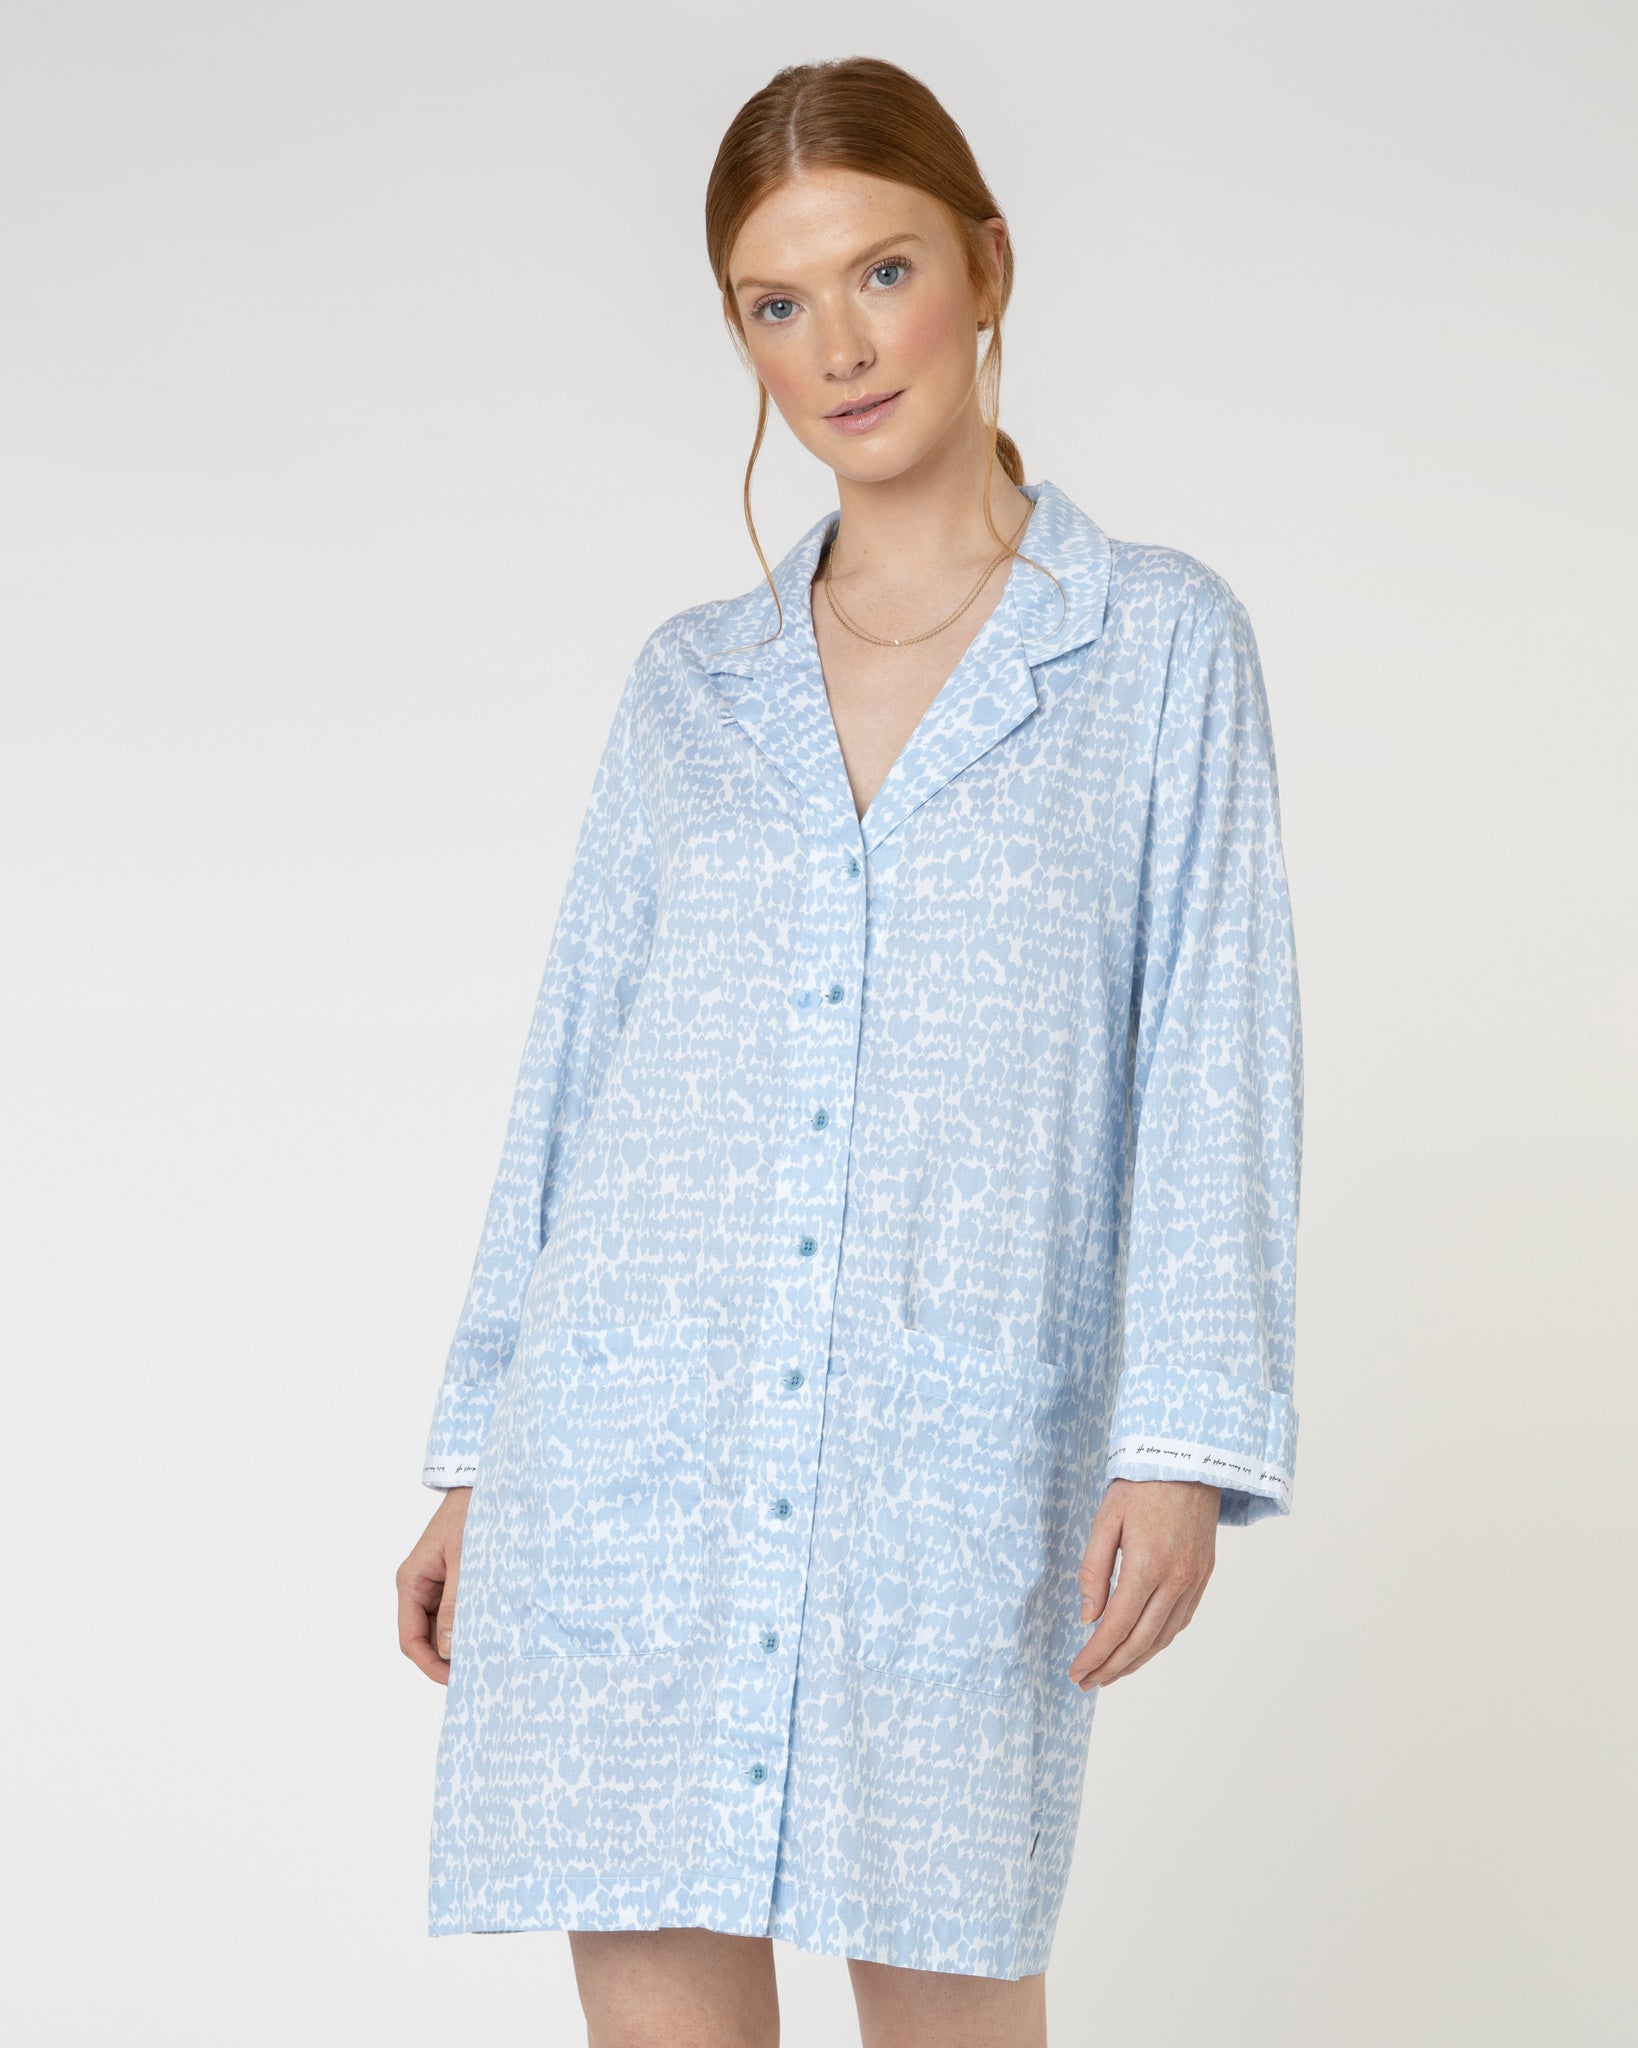 Luxury Organic Cotton Nightshirts For Women | Yawn